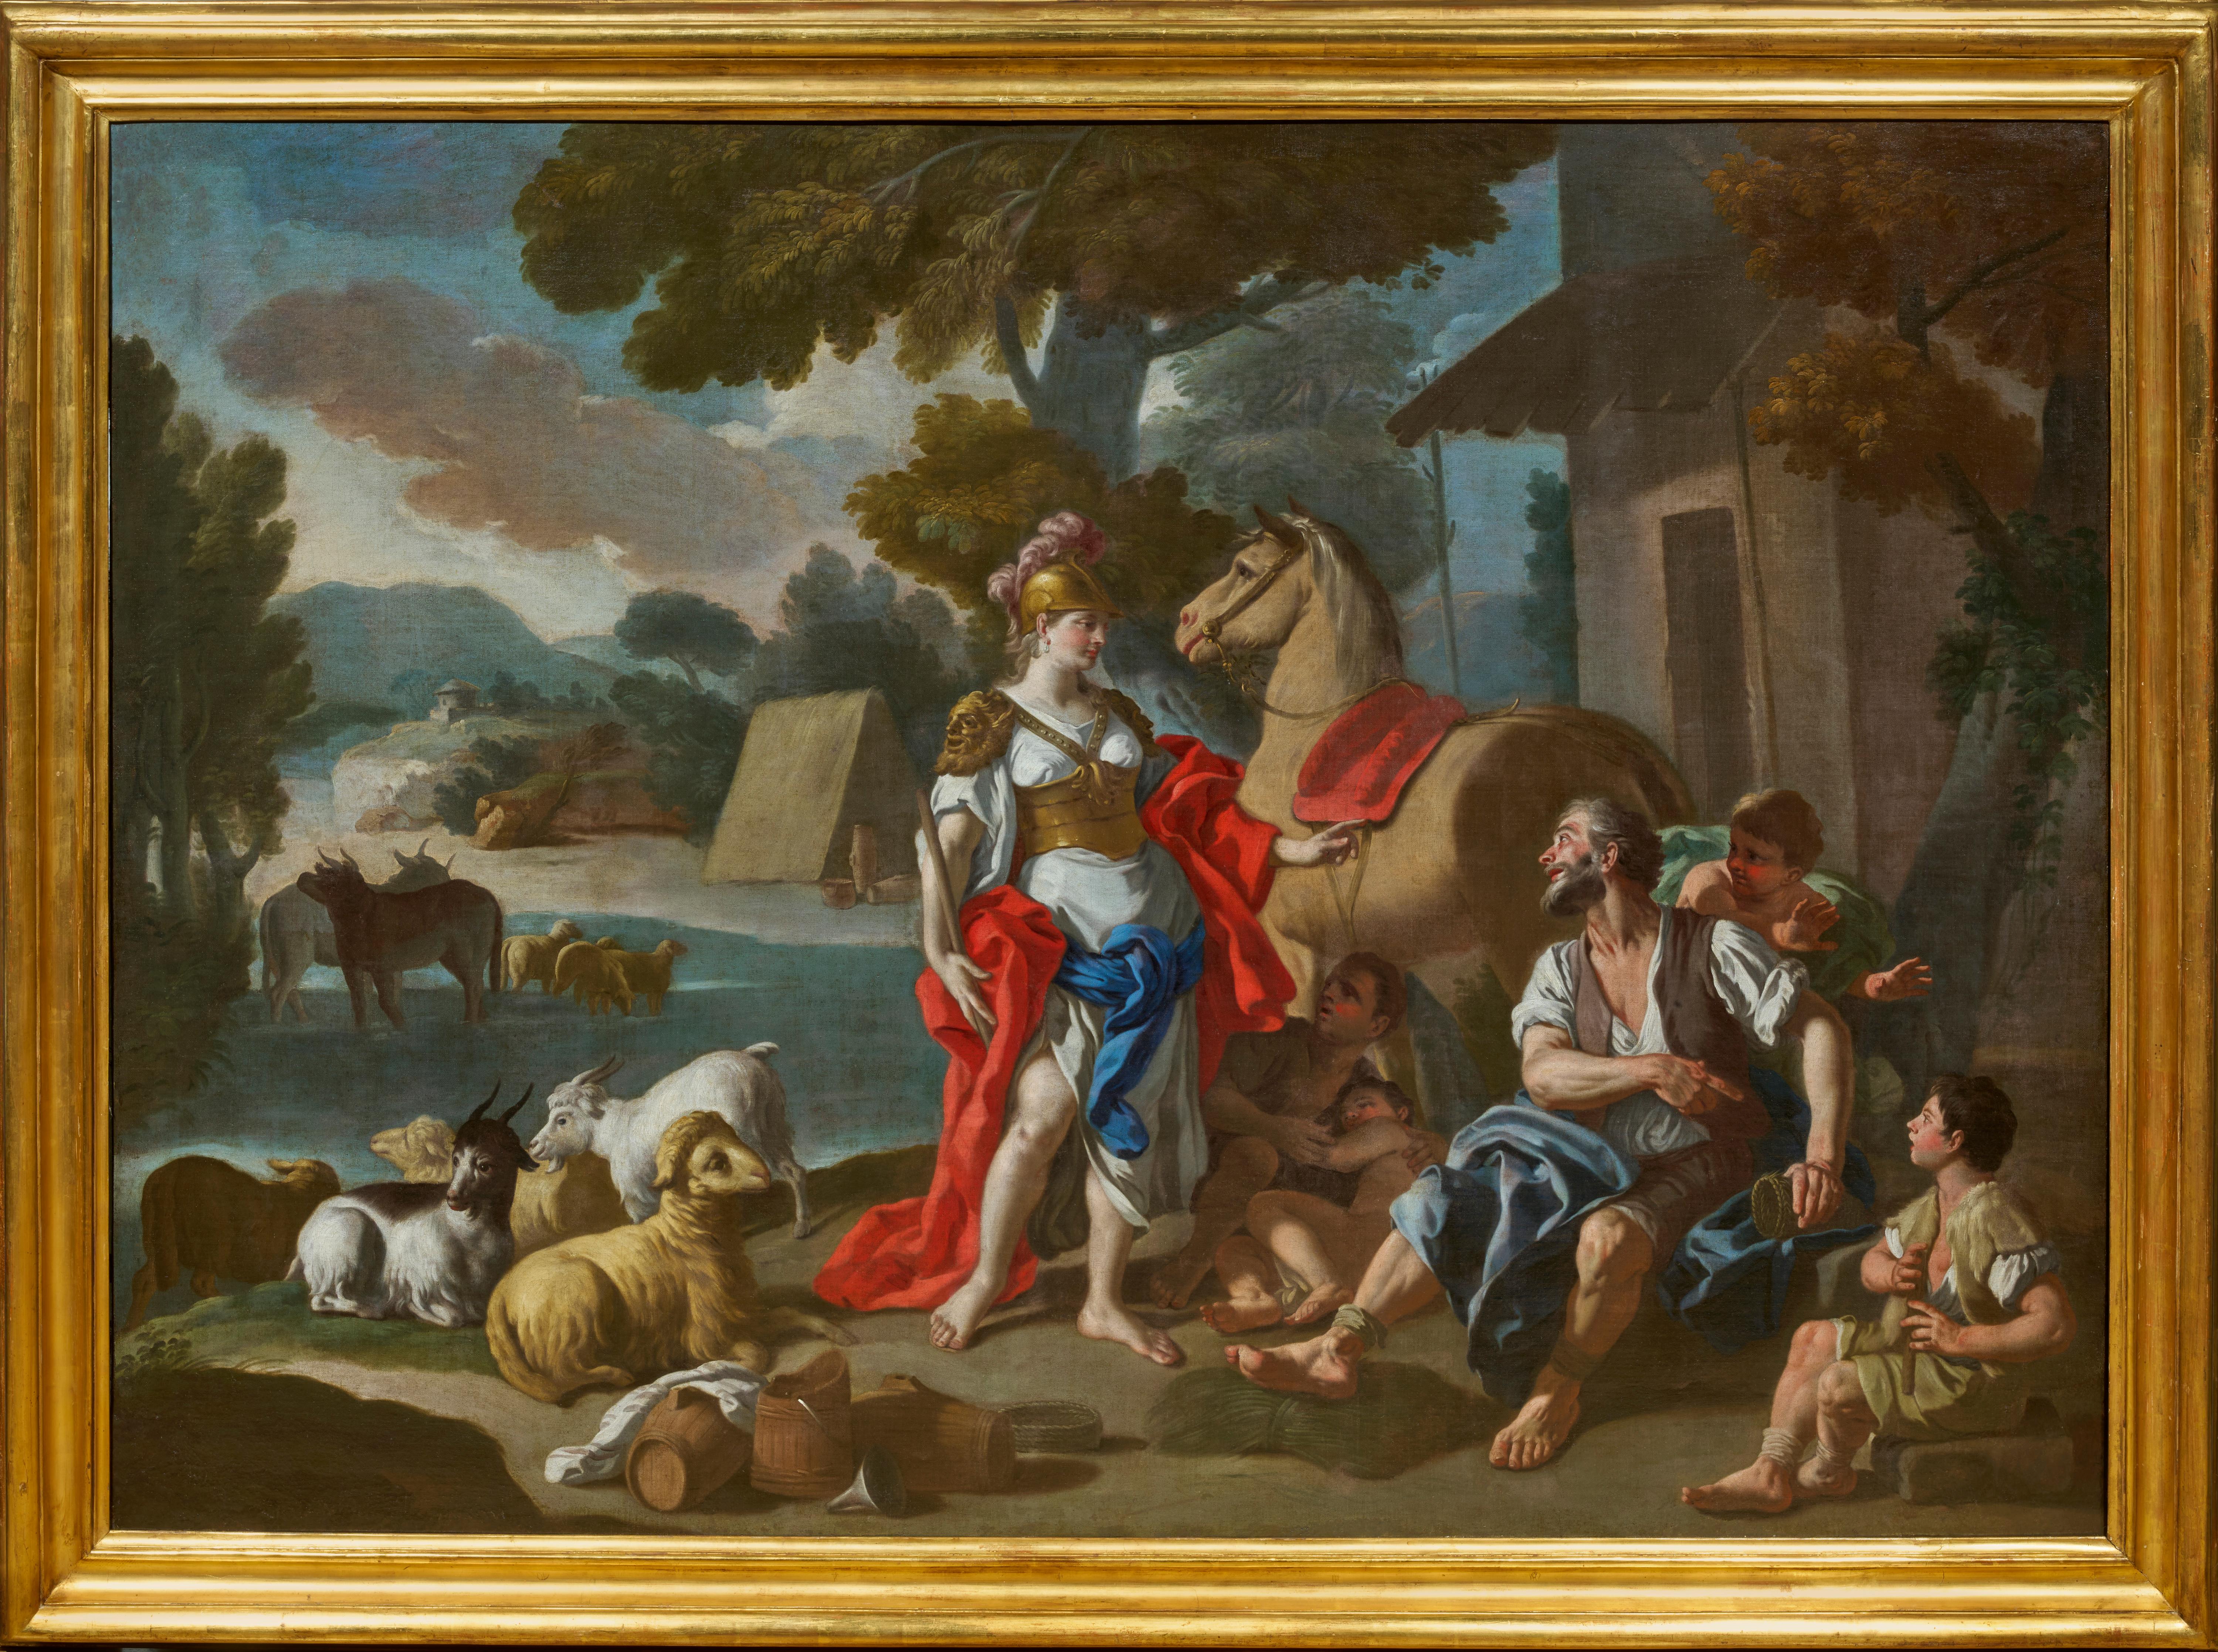 Herminia and the Shepherds, a painting by Francesco de Mura (Napoli 1696 - 1782)